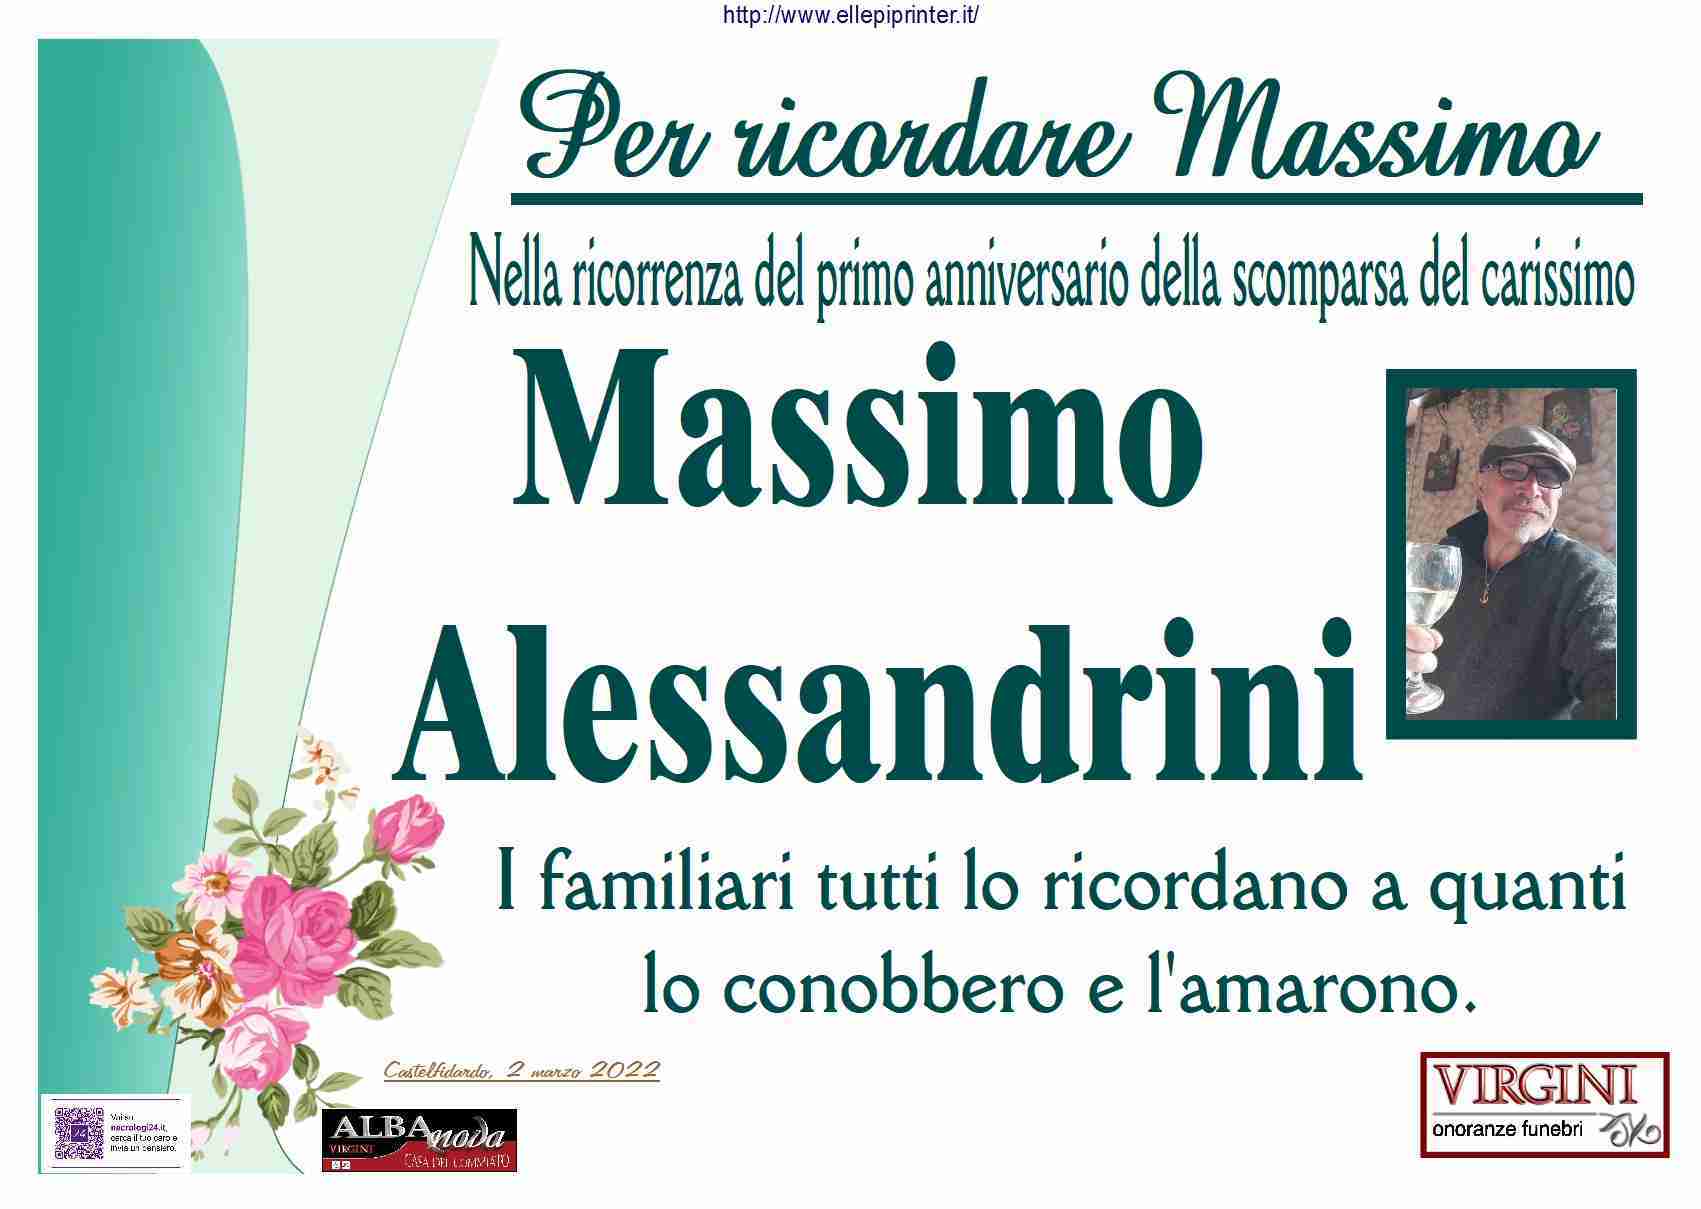 Massimo Alessandrini